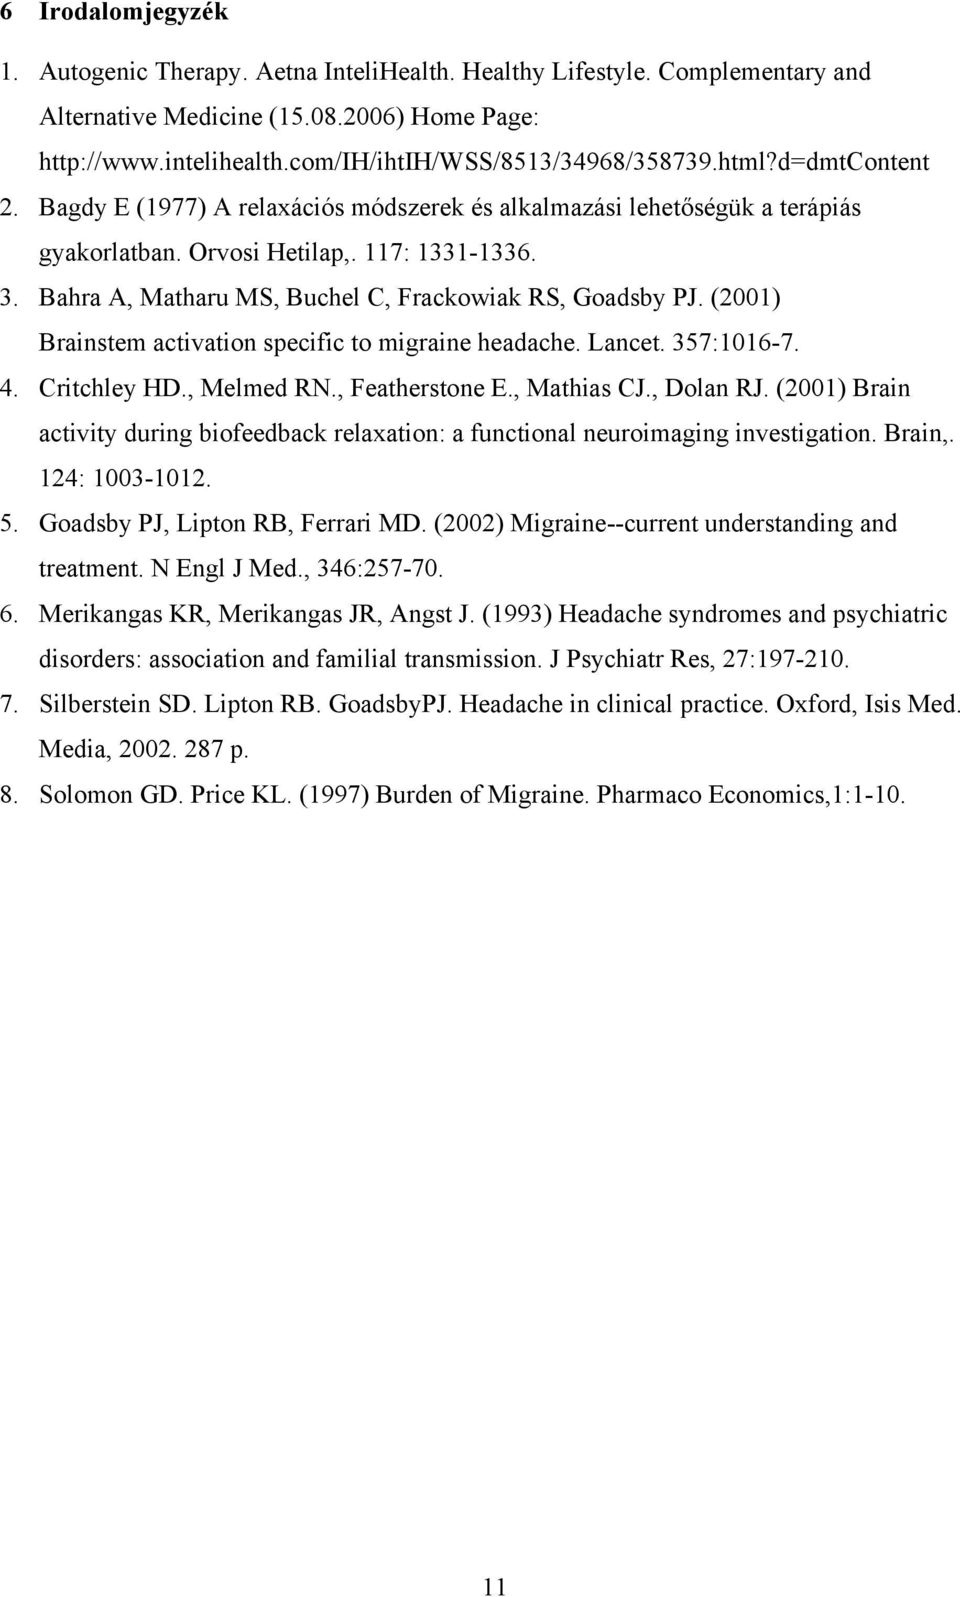 Bahra A, Matharu MS, Buchel C, Frackowiak RS, Goadsby PJ. (2001) Brainstem activation specific to migraine headache. Lancet. 357:1016-7. 4. Critchley HD., Melmed RN., Featherstone E., Mathias CJ.